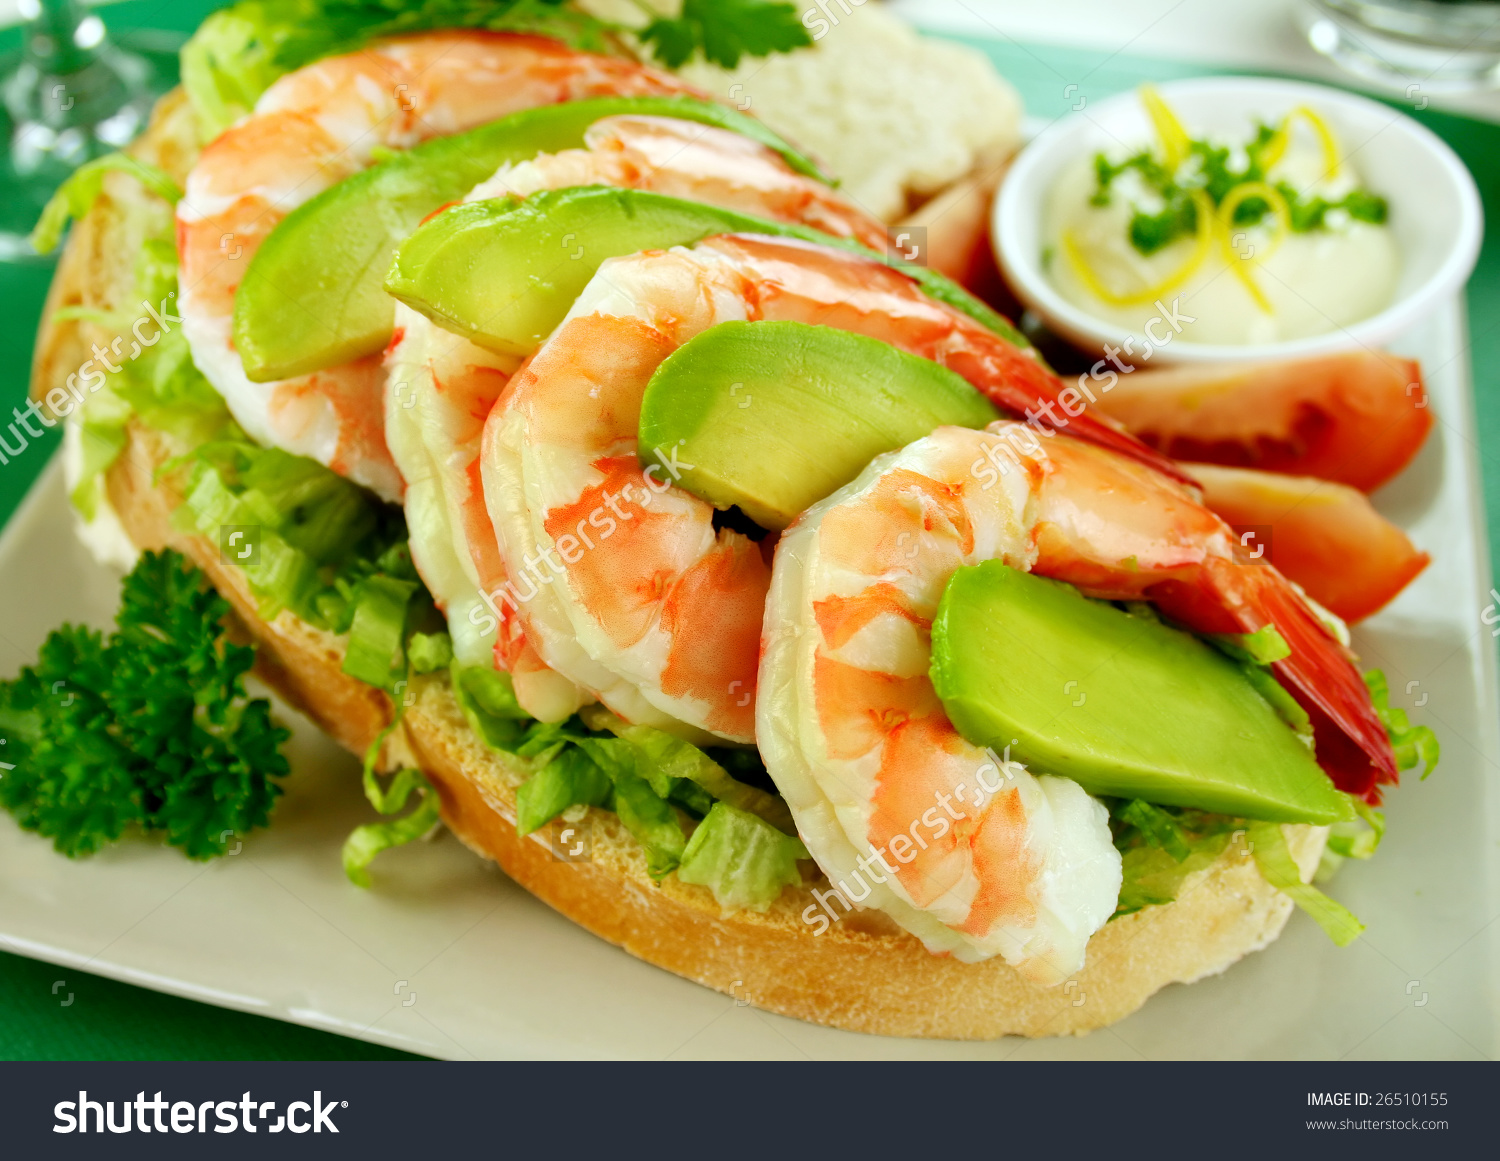 Delightful Fresh Shrimp And Avocado Open Sandwich With Lemon.